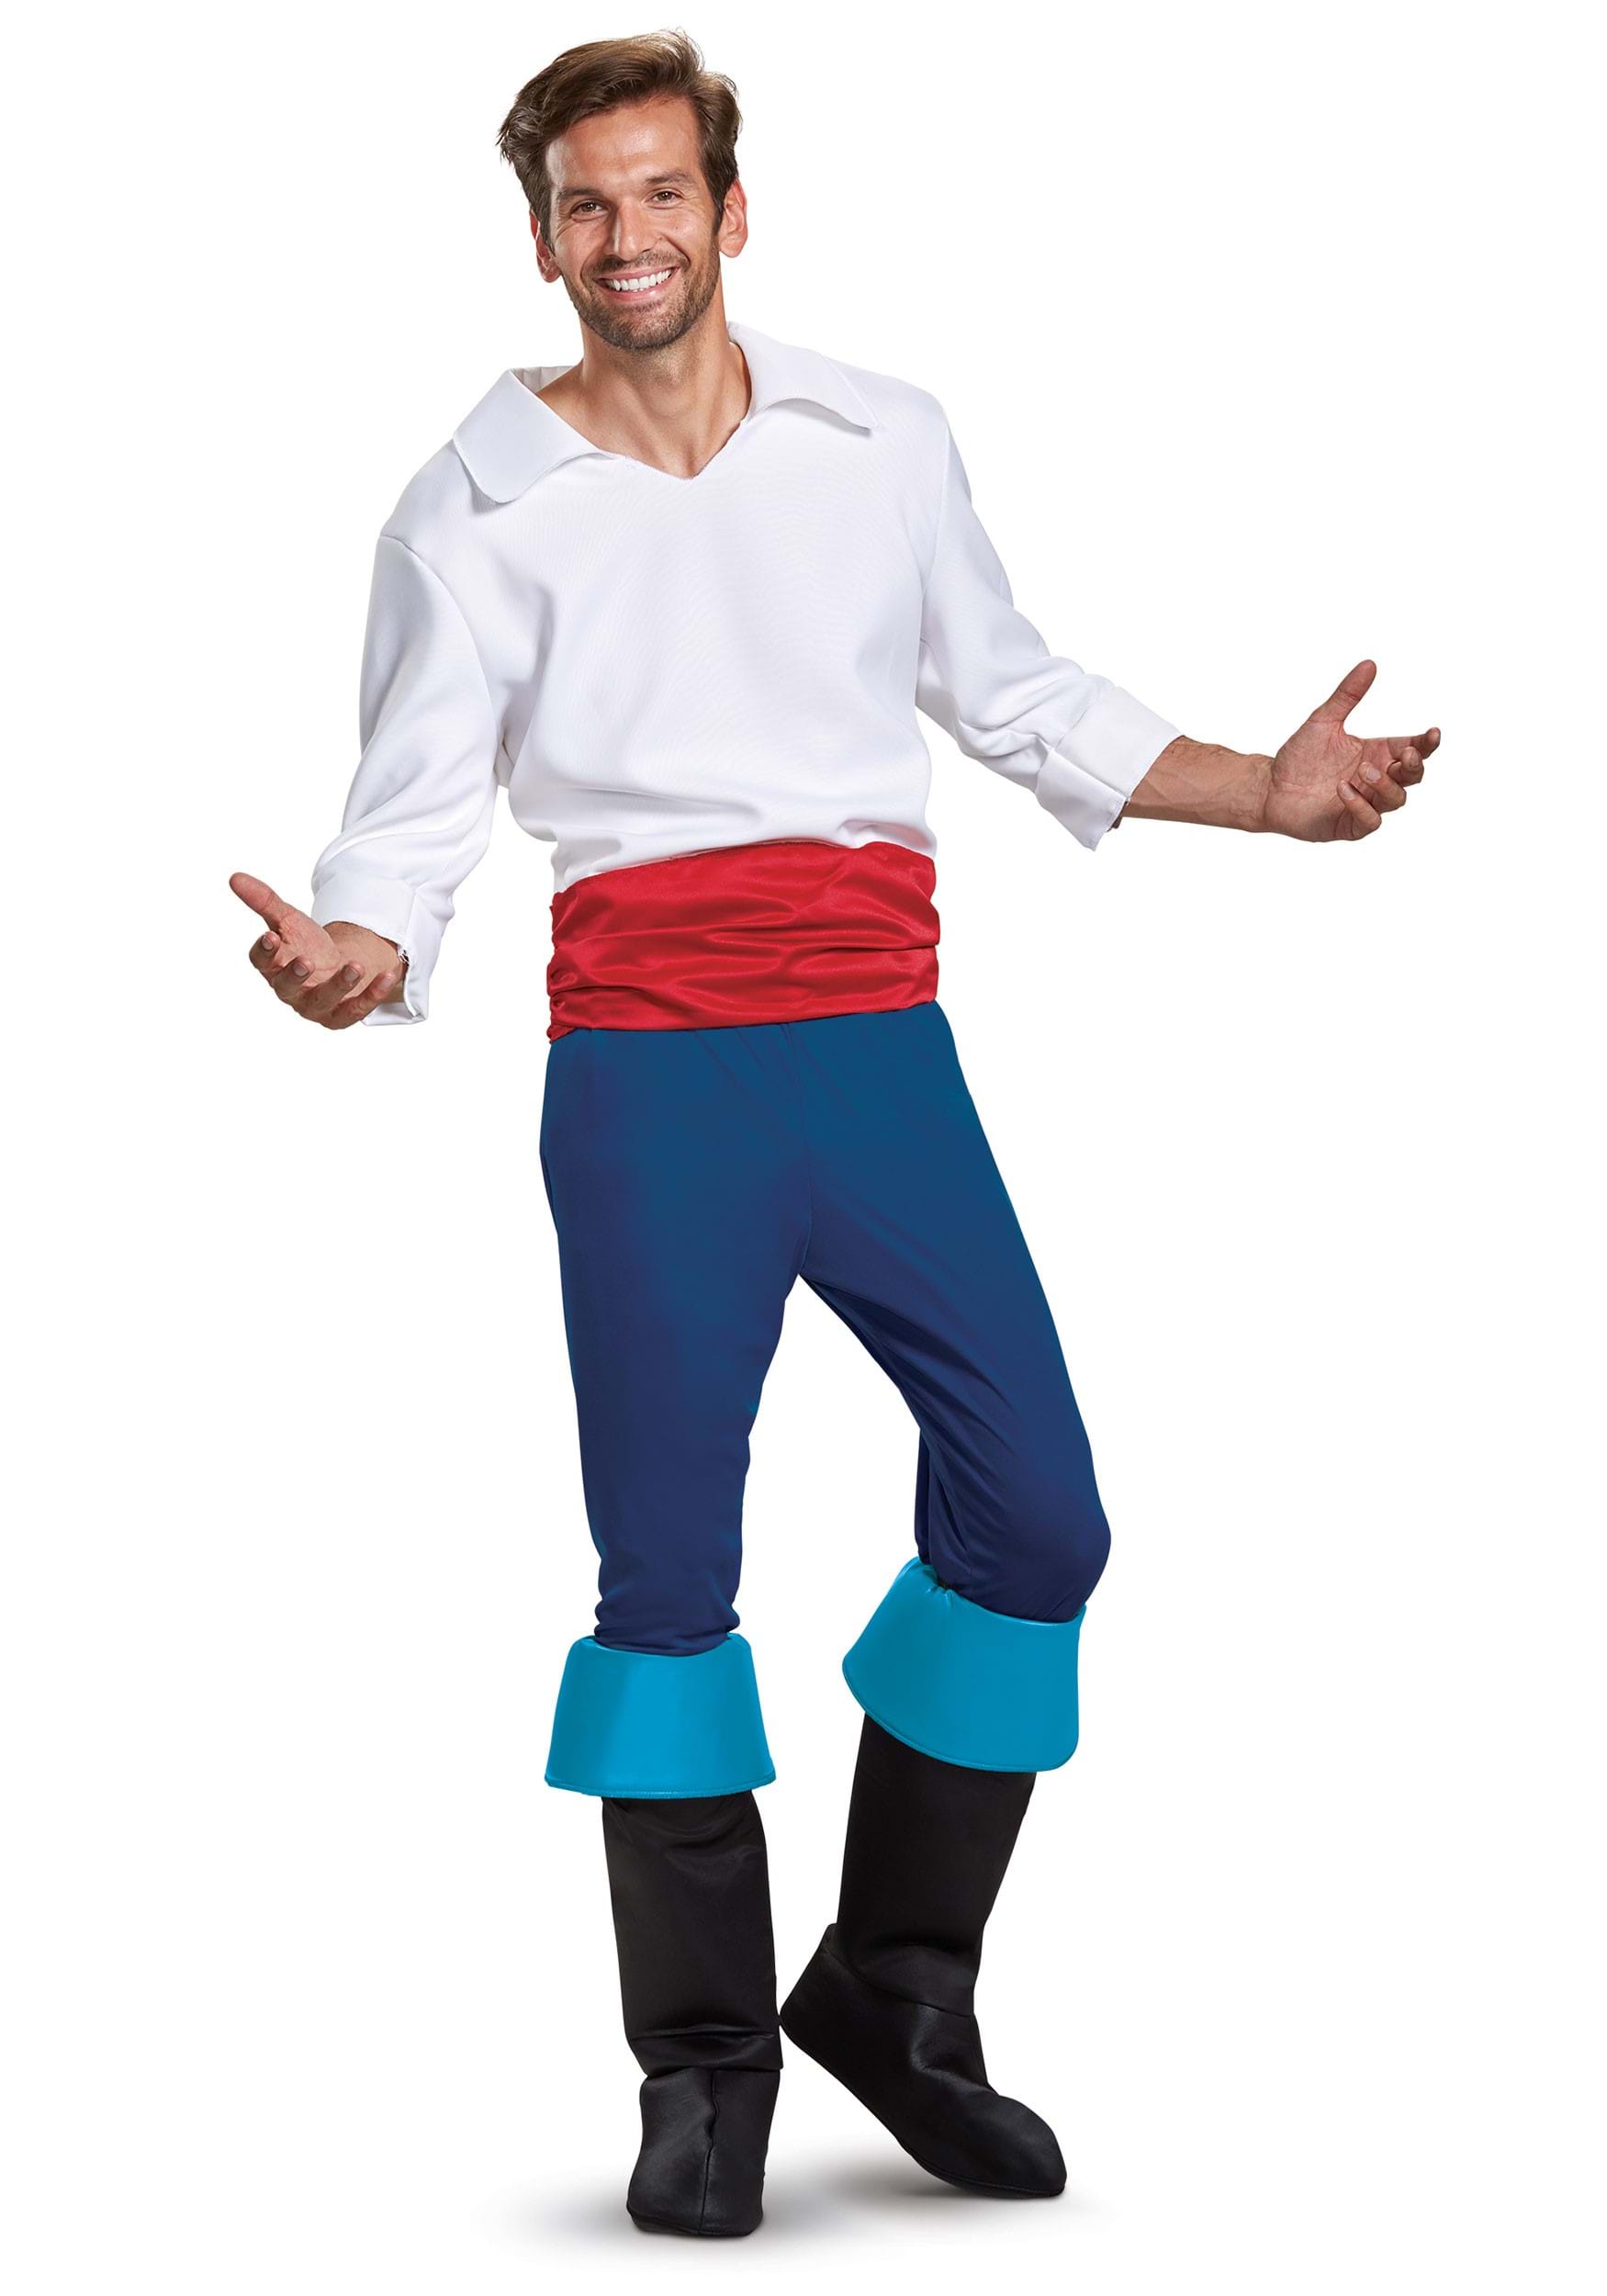 Disney Prince Eric Deluxe Men's Costume - image 3 of 11